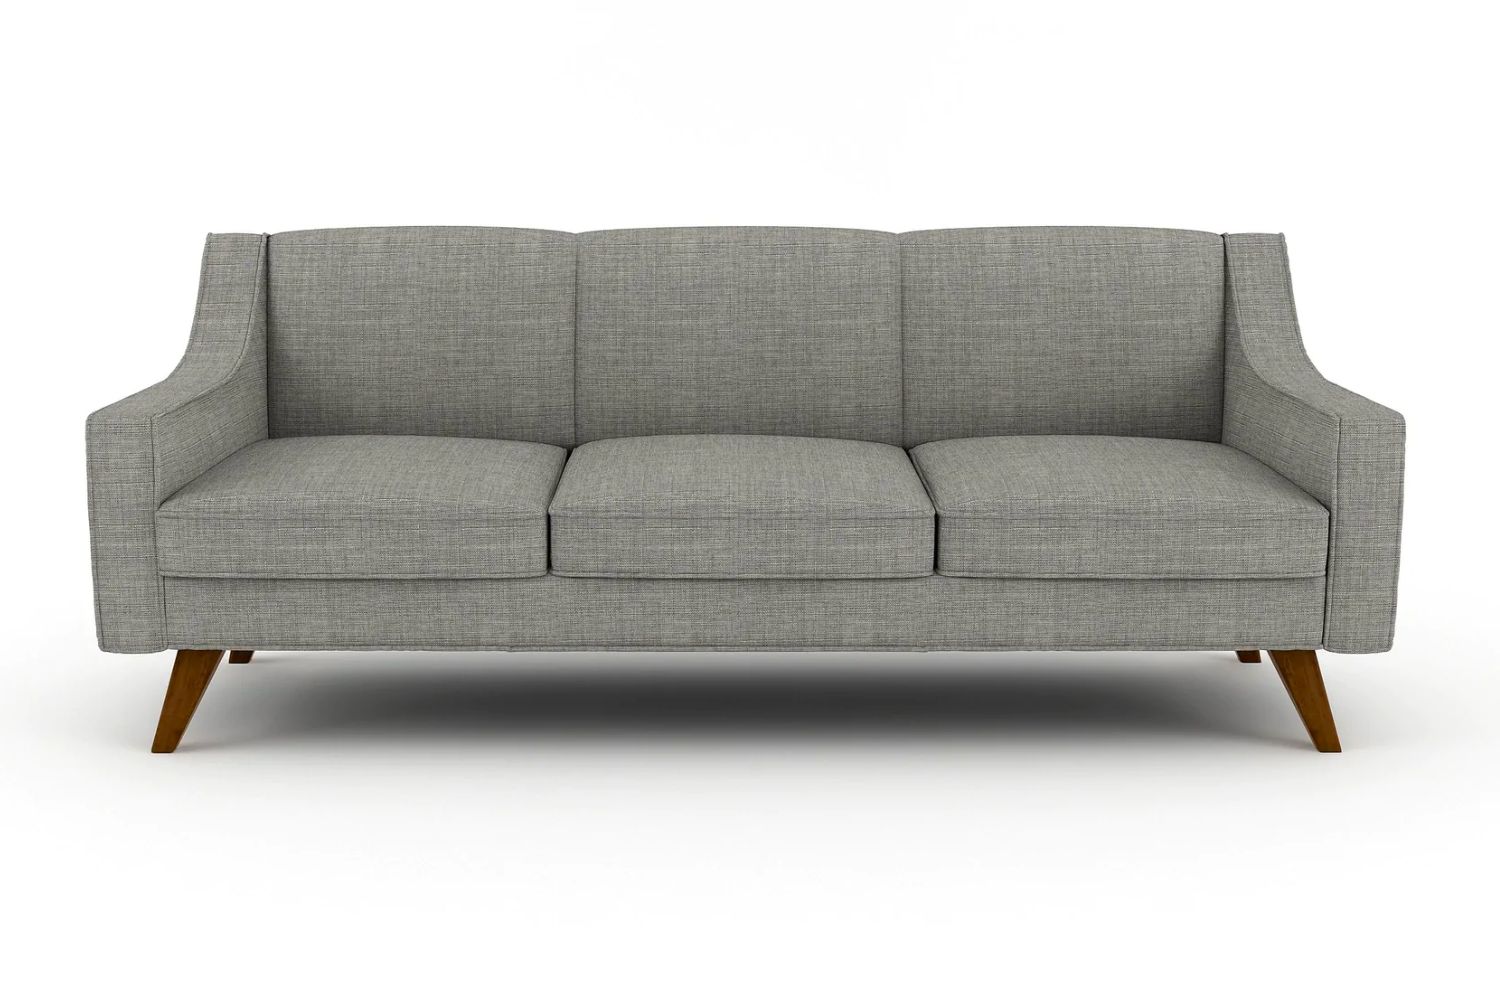 The Best Sofa Brands Option: Medley Home